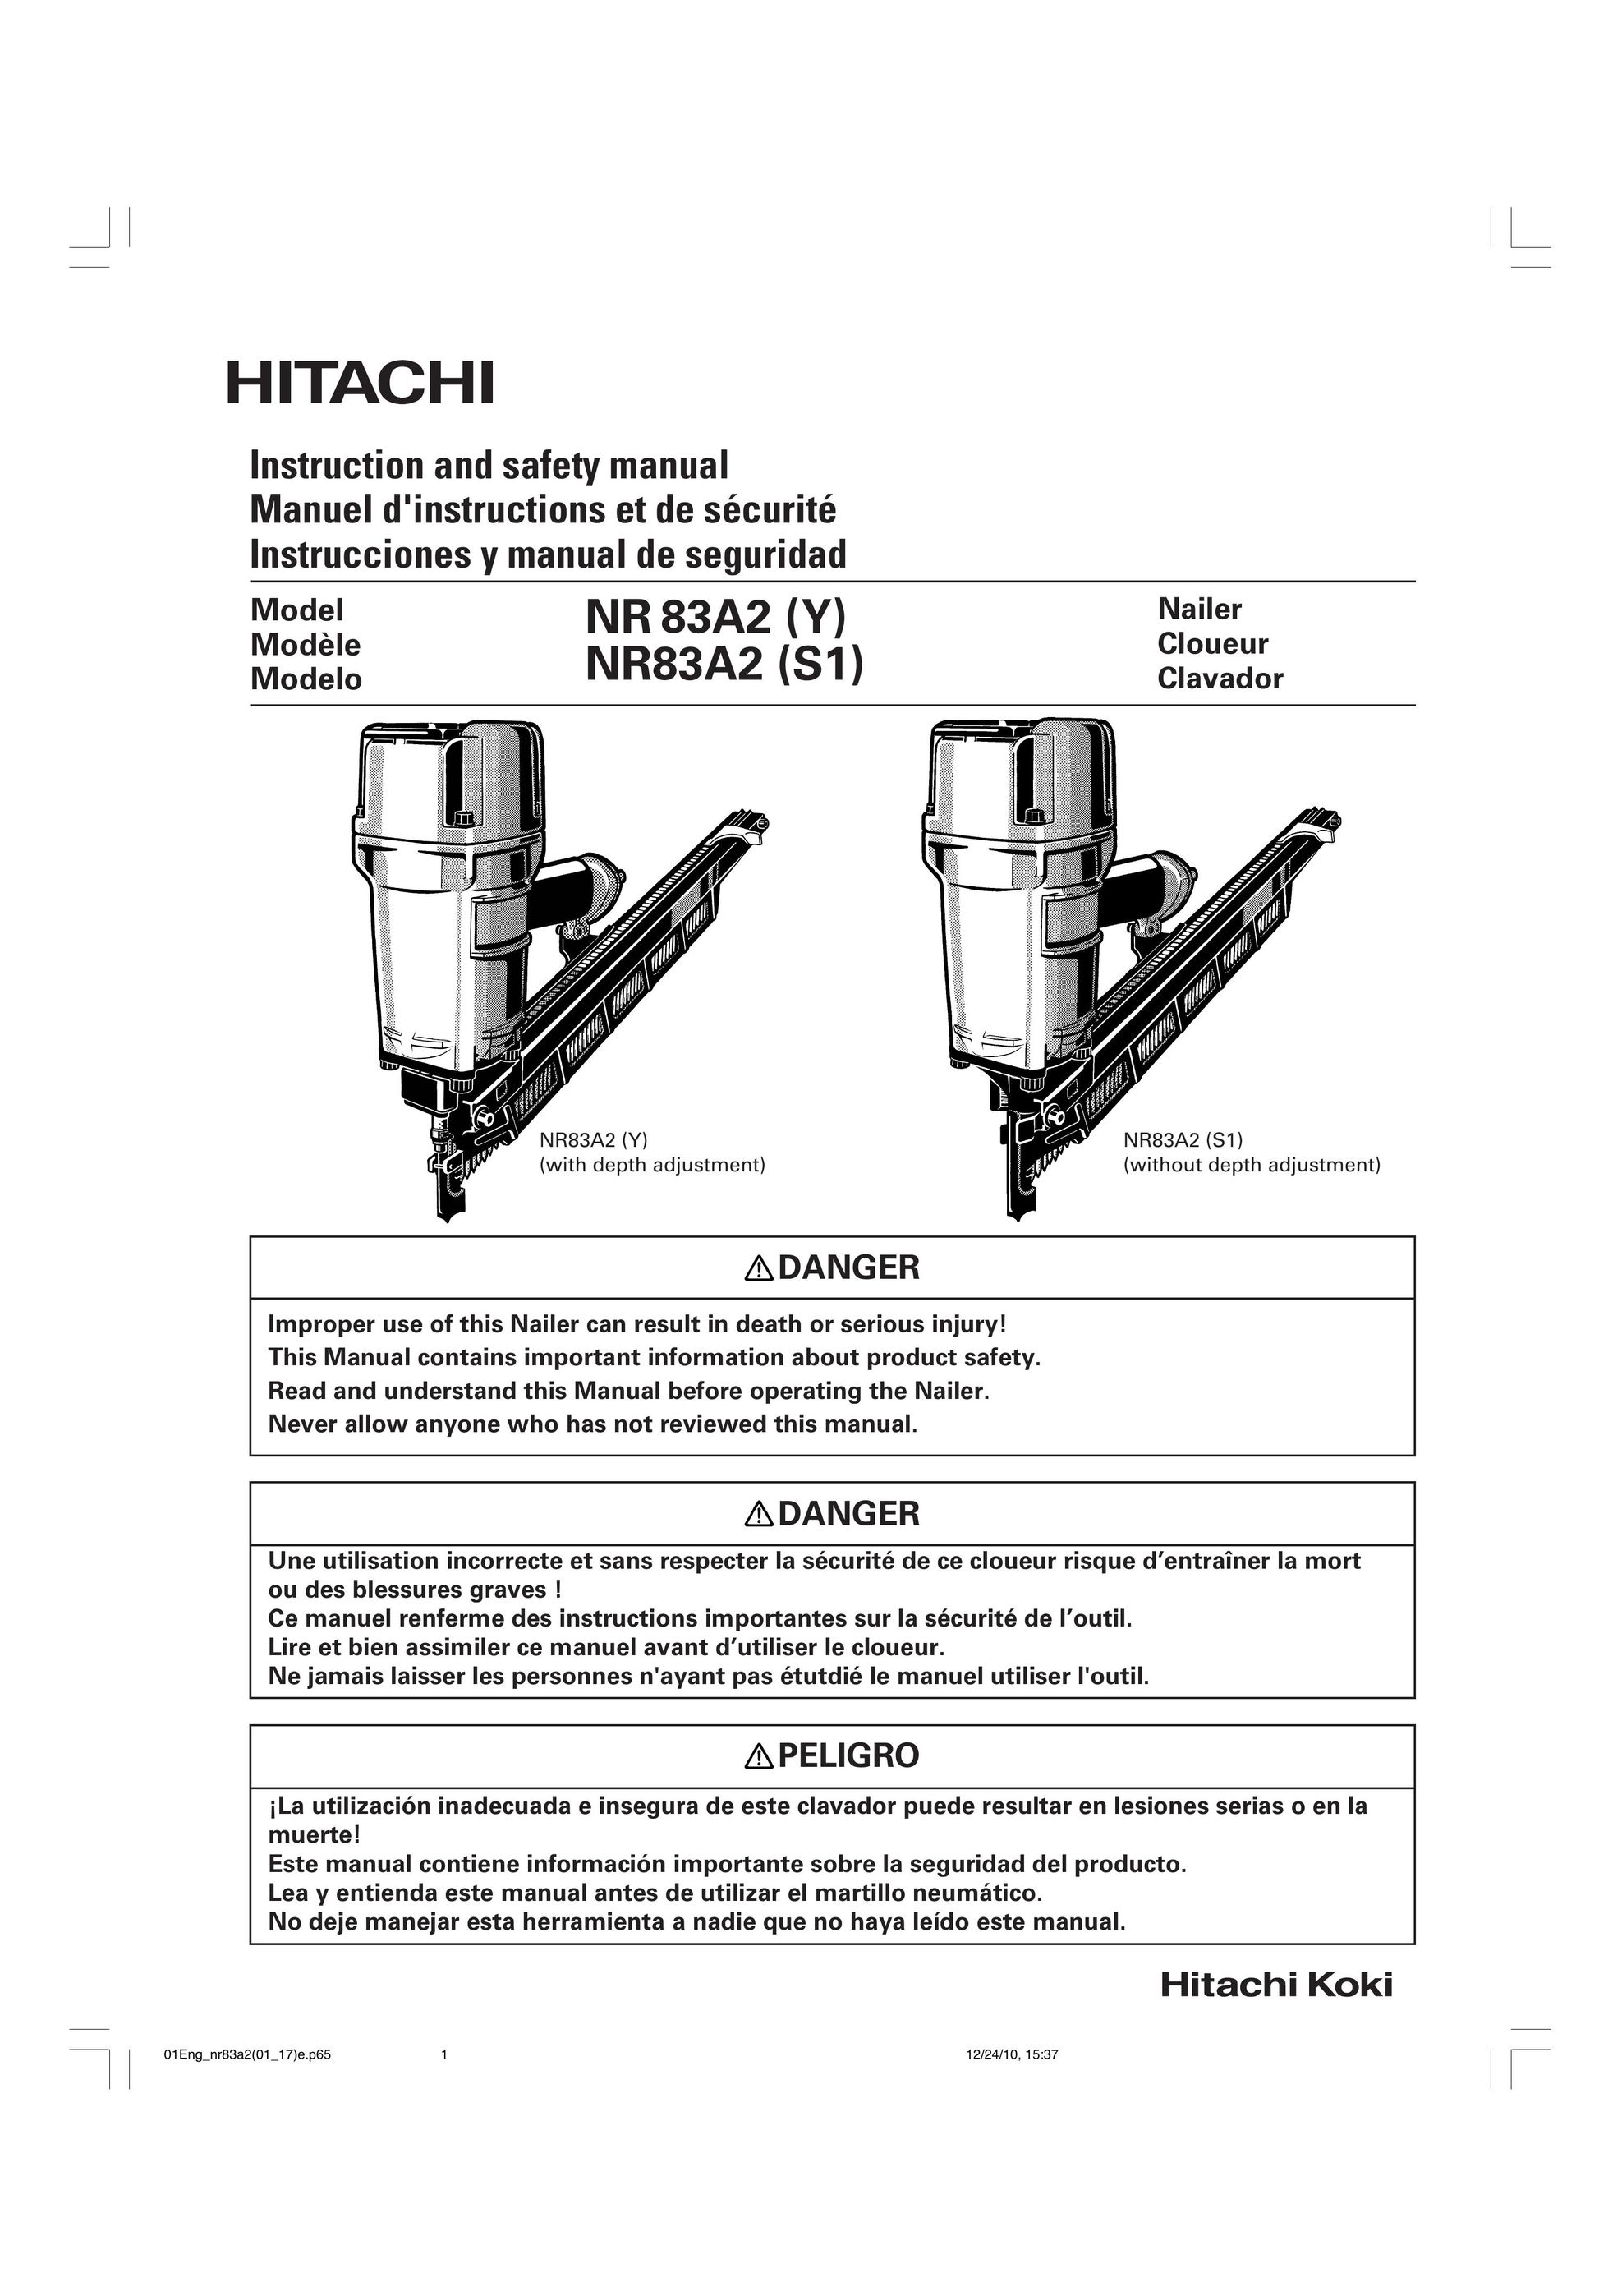 Hitachi NR83A2(Y) Nail Gun User Manual